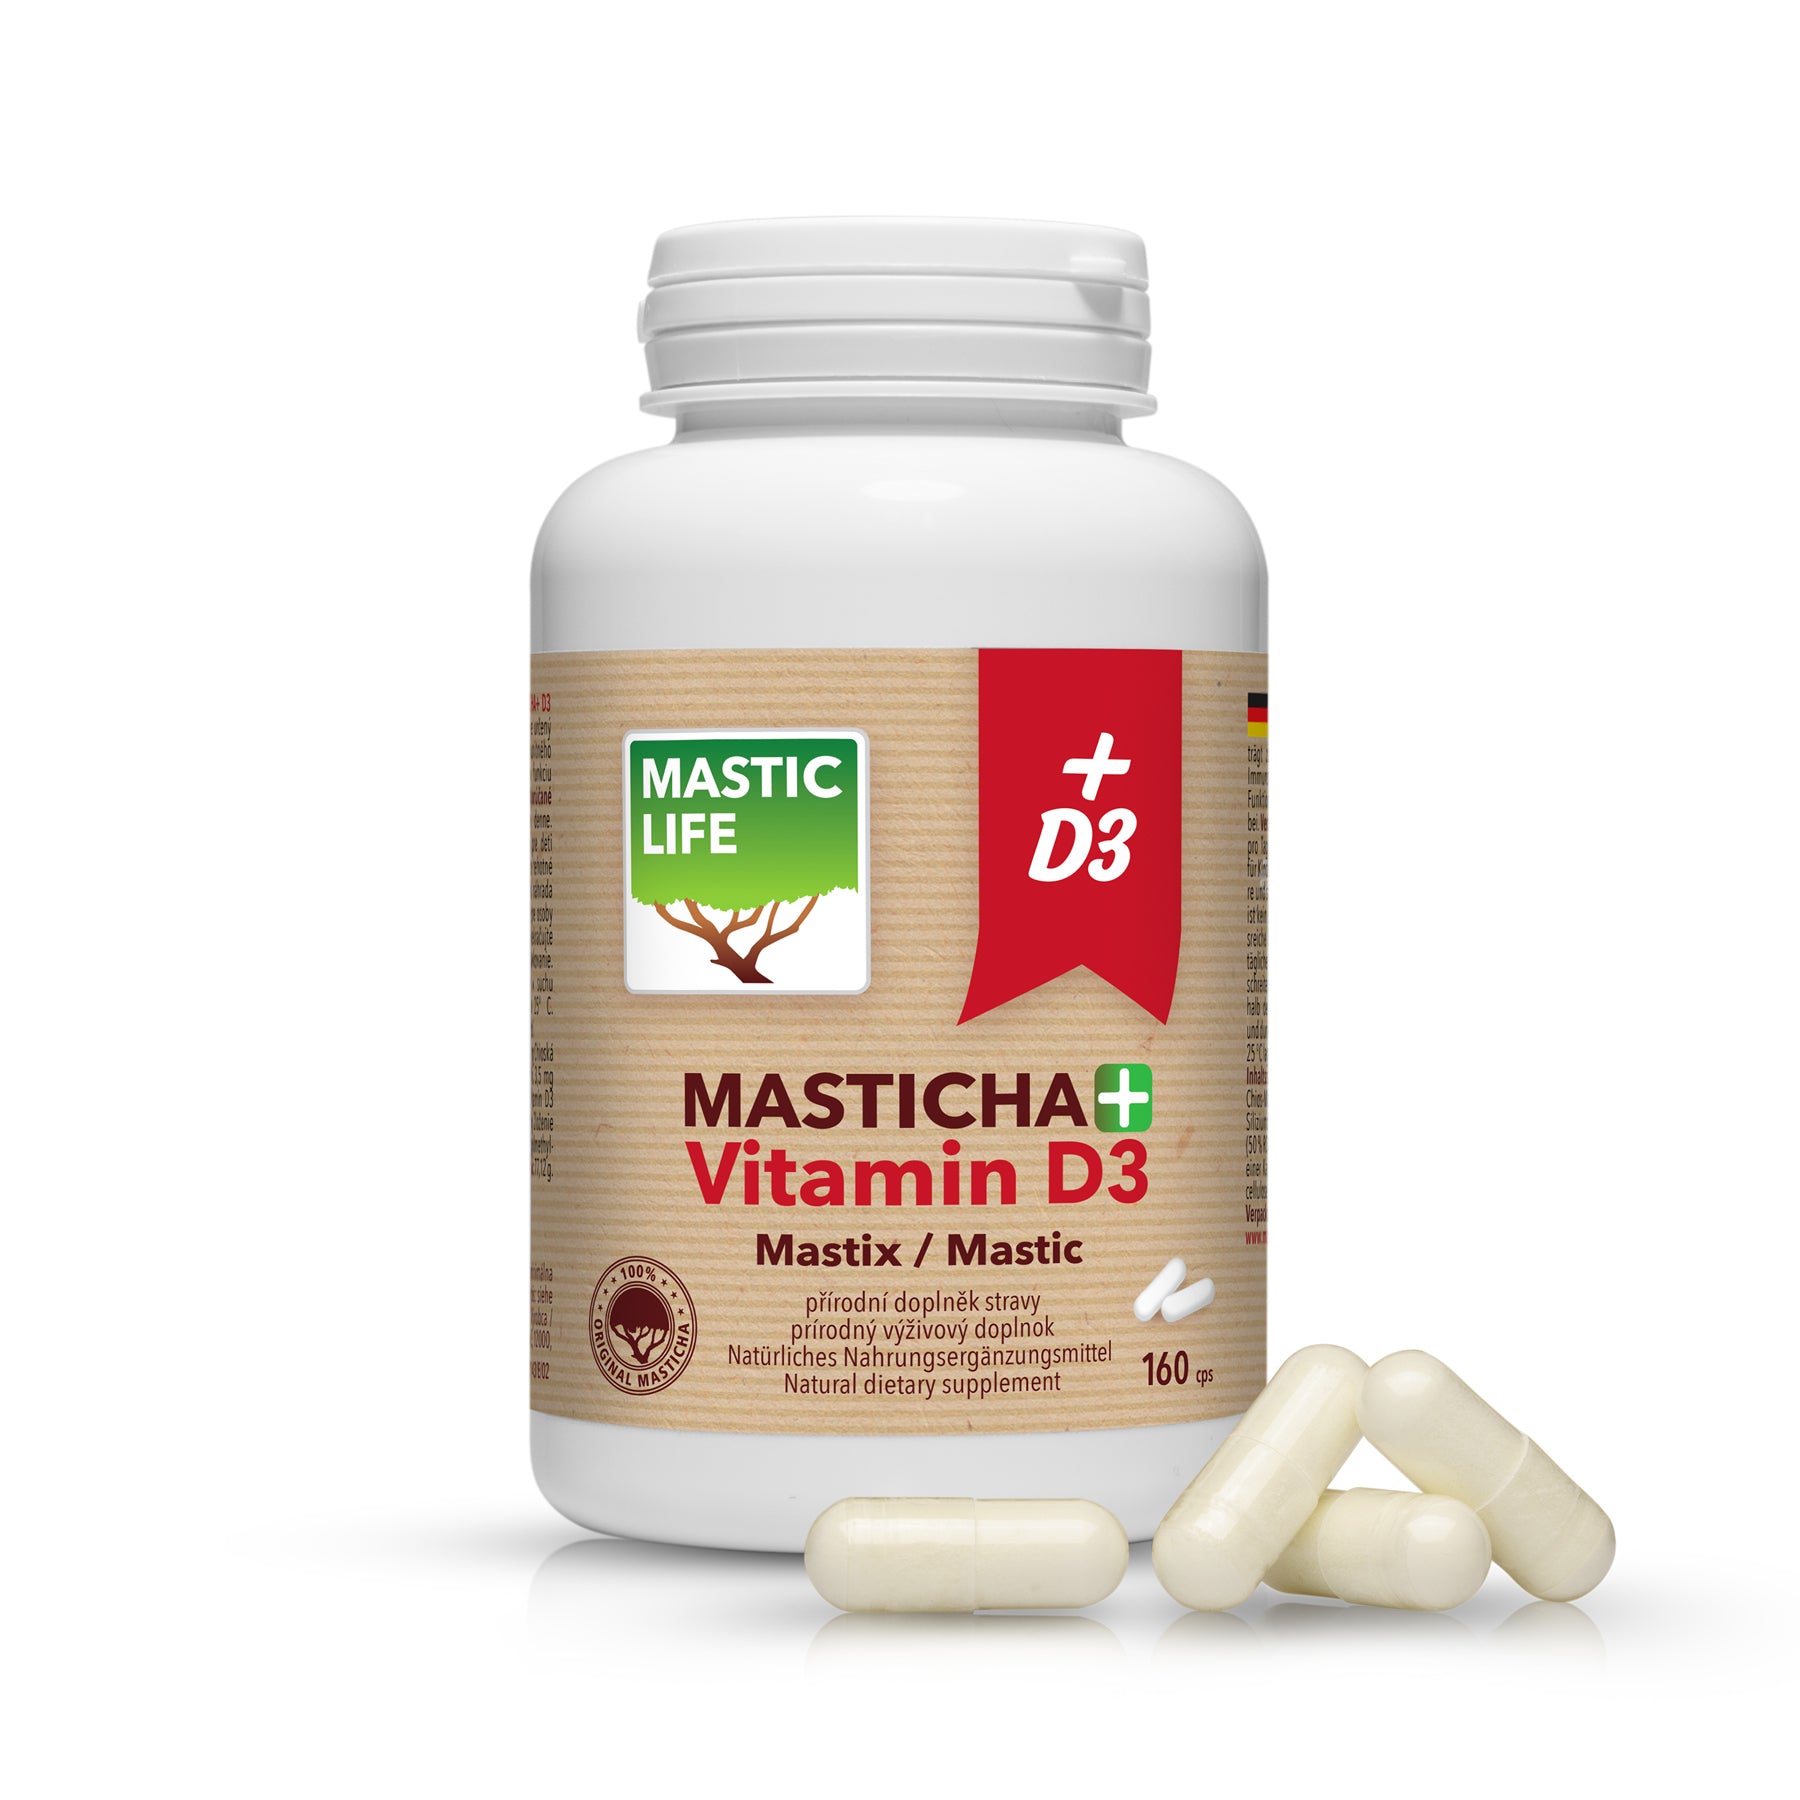 Mastic+ Vitamin D3 (160 Capsules) Masticlife